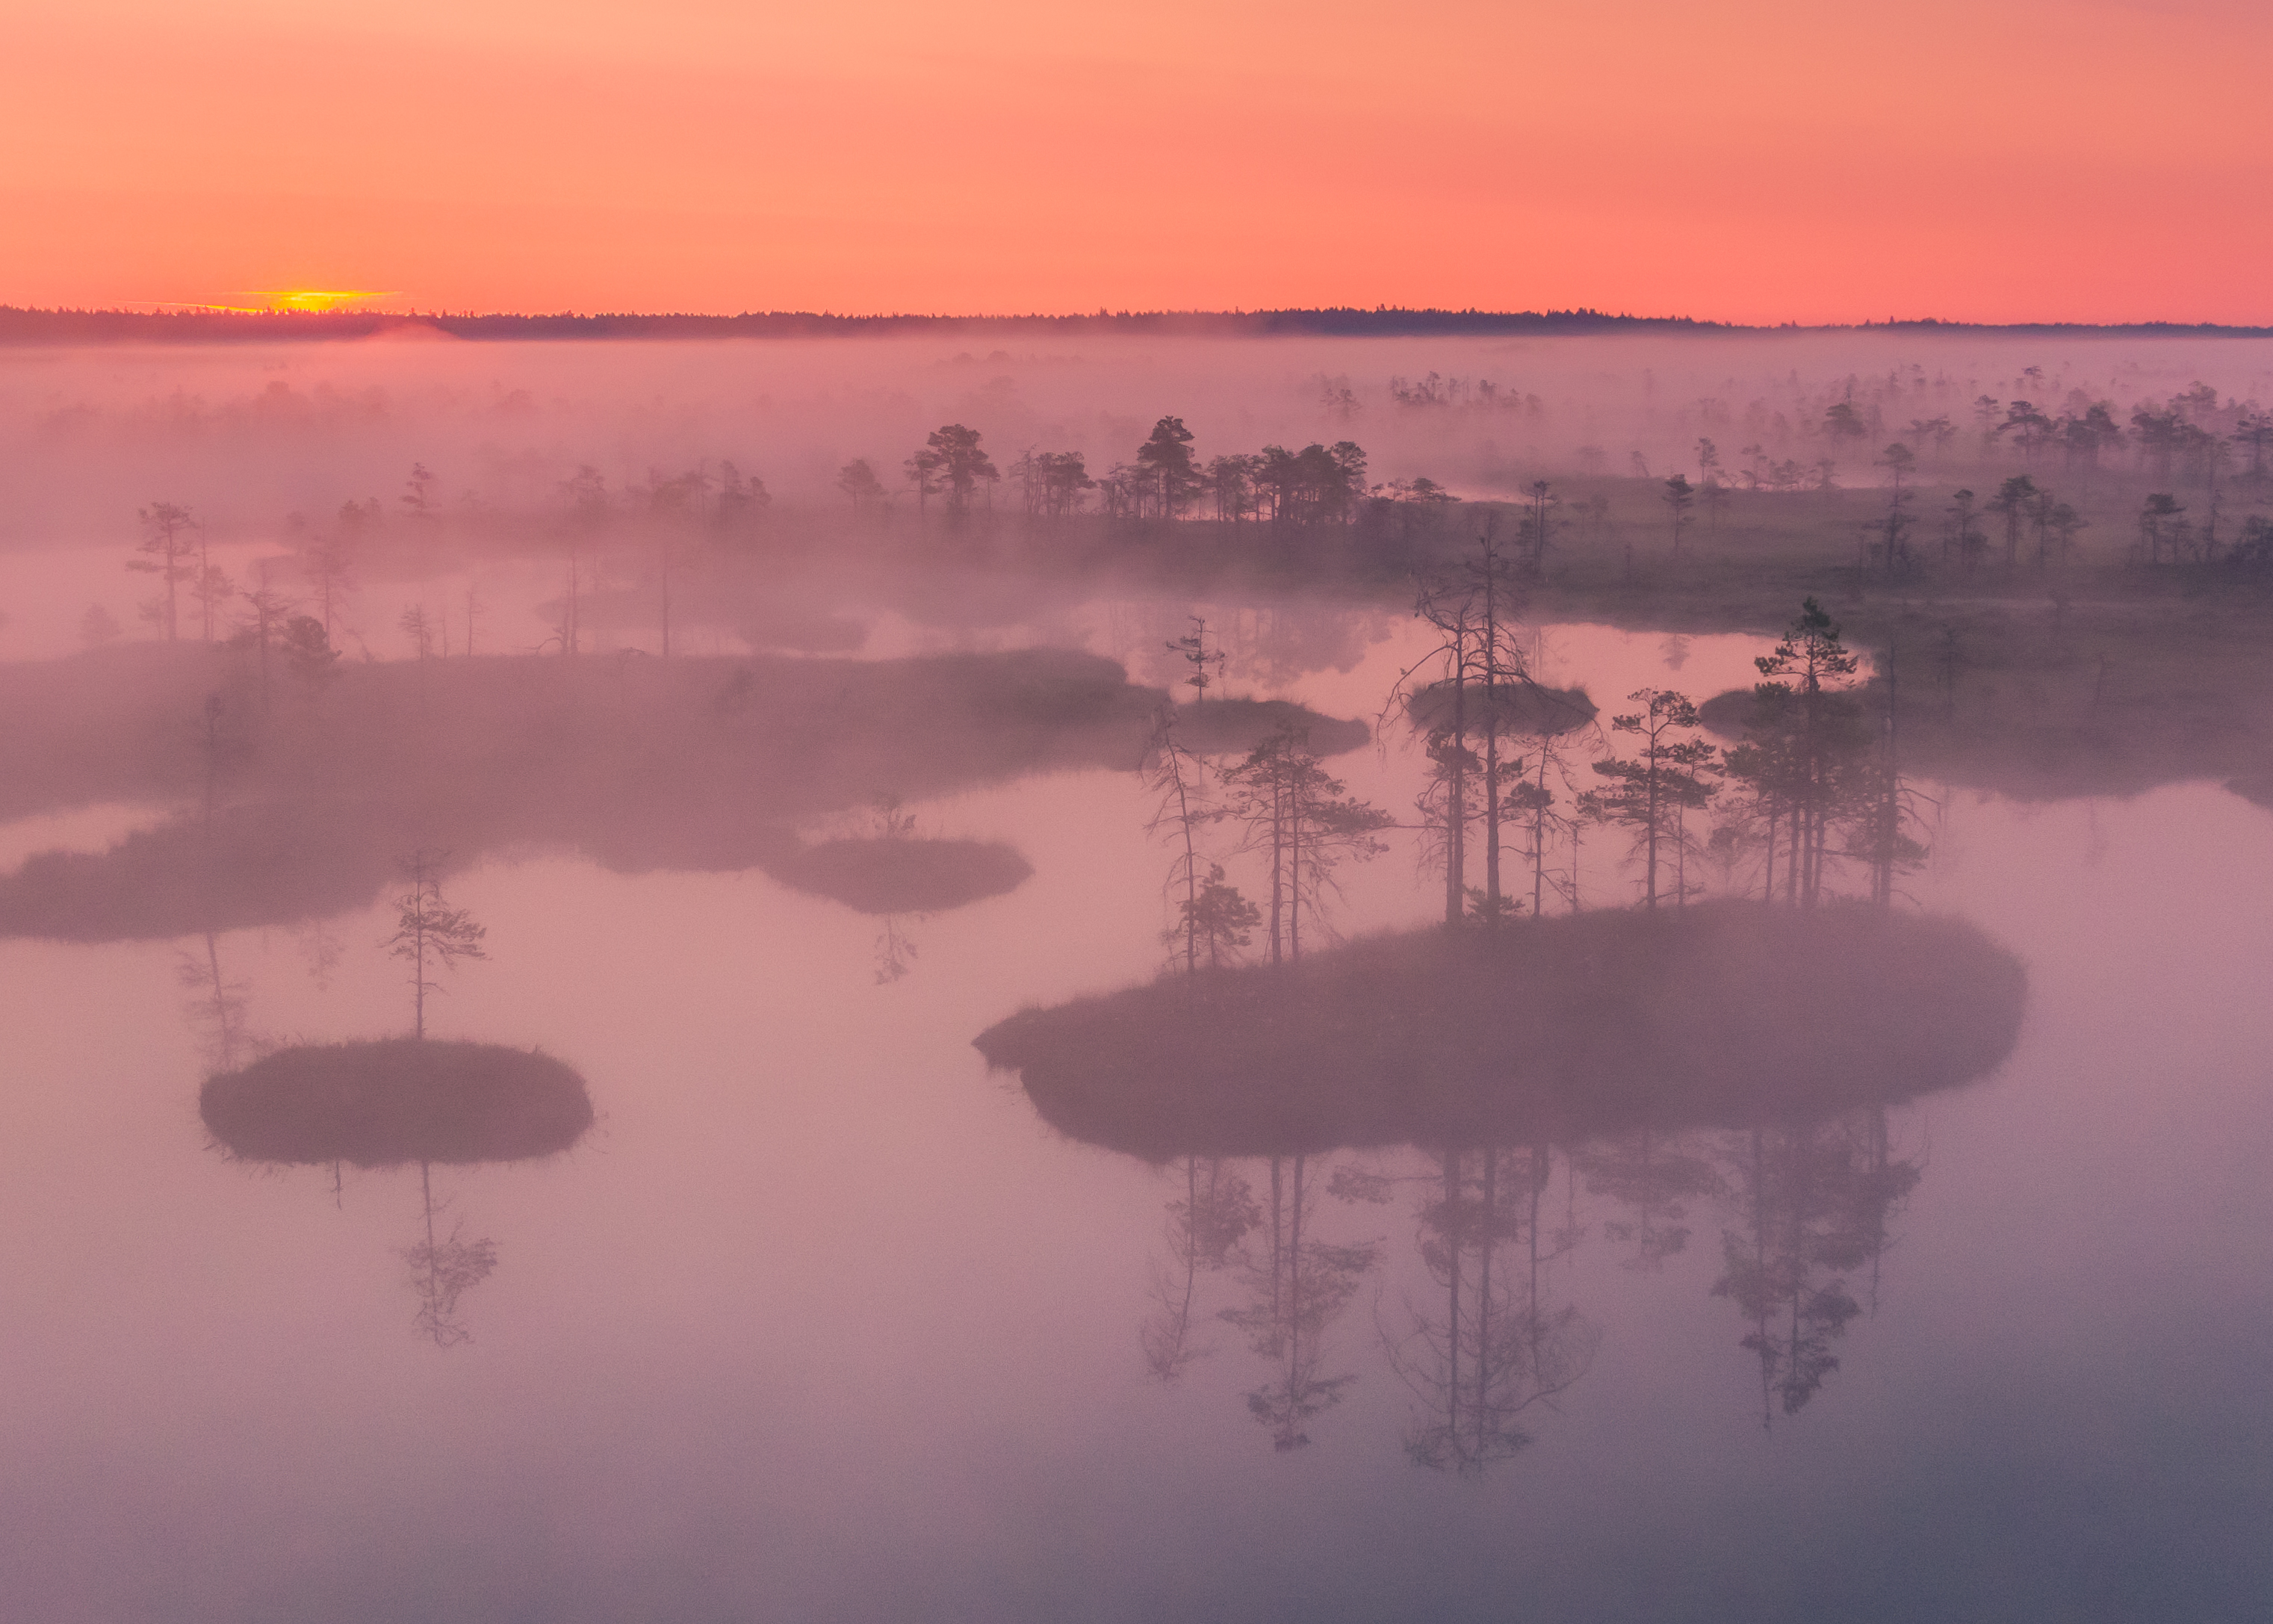 #estonia #estoniabogs #nature_of_estonia #naturelovers #sunrise_sunset_photogroup #sunriseoftheday #foggymorning #foggy #bog #kõnnusuursoo #visitharju #visitestonia #earlymorningwalk #morningmotivation #sunrise_sunsets #dji #drone #aerial #djiphotography , Nikolai Mordan